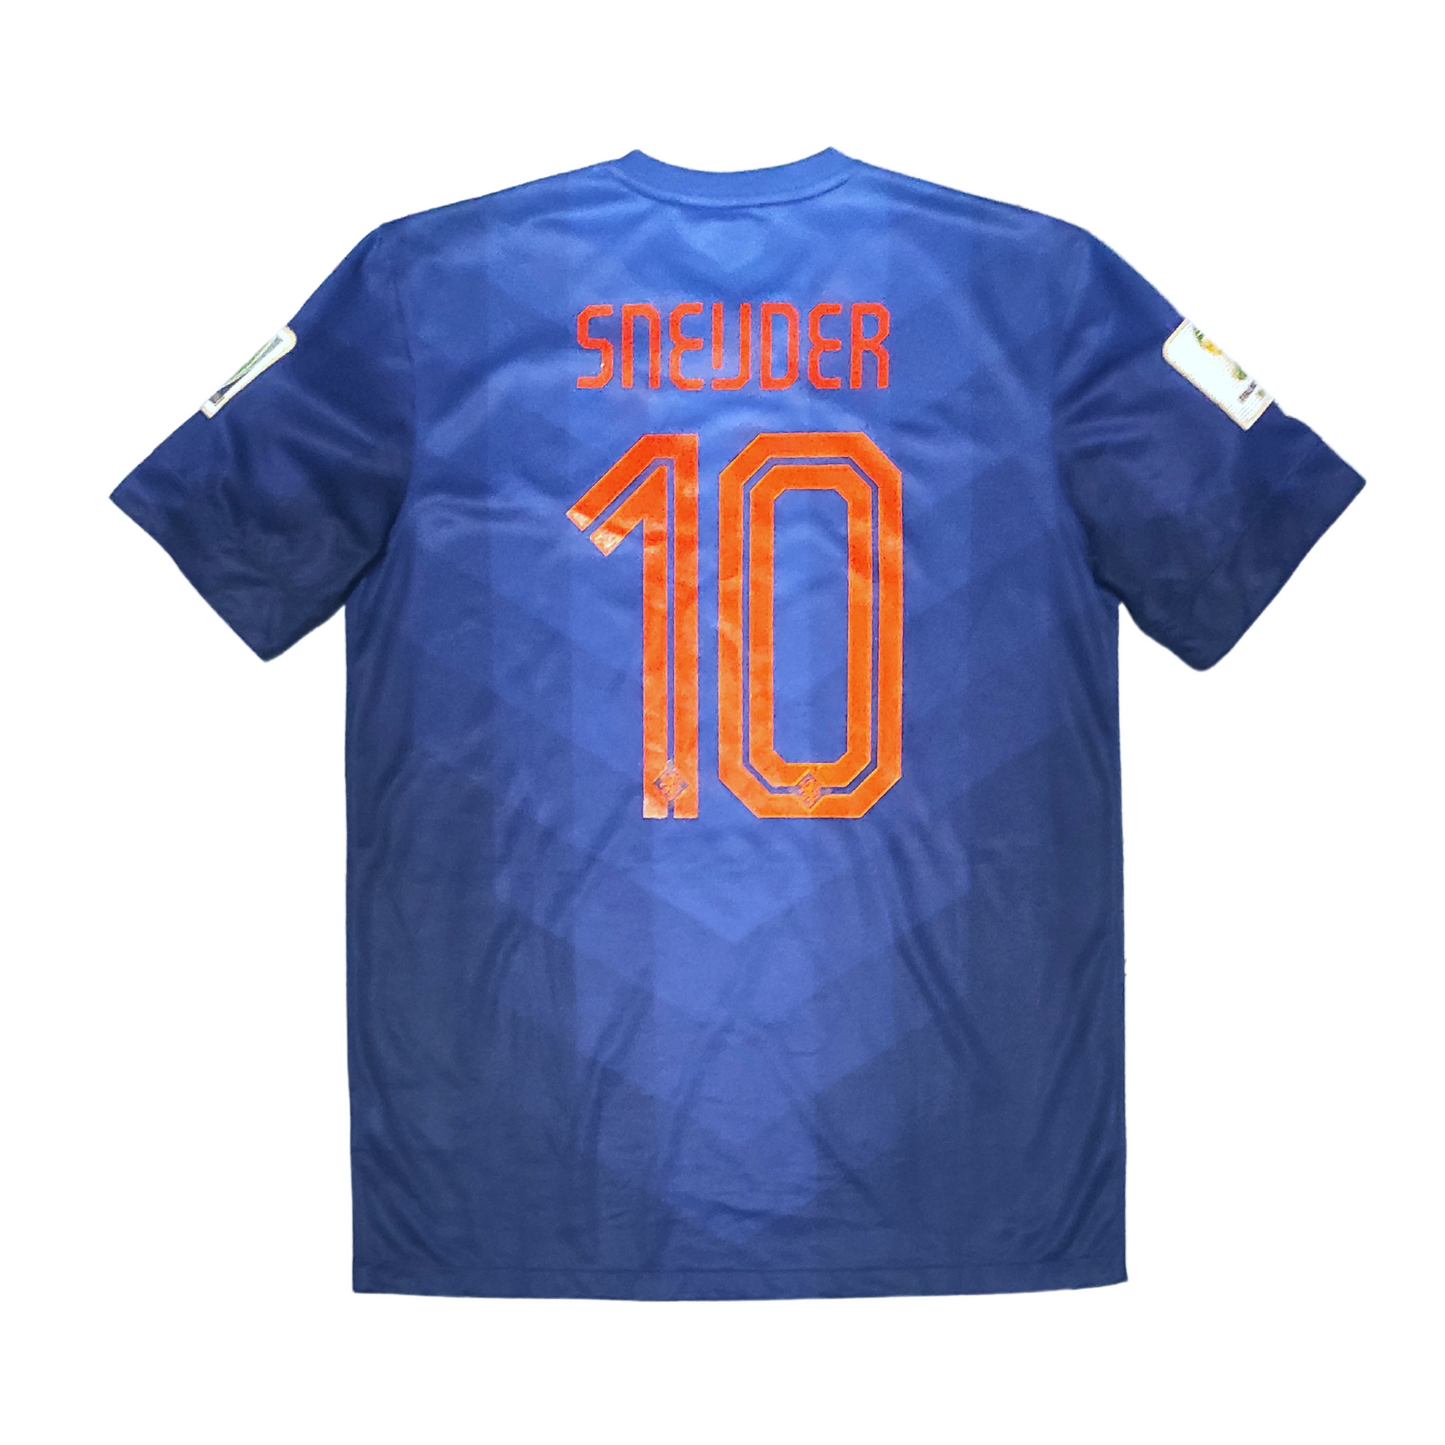 Netherland Away Shirt 2014-2015 Sneijder (M)